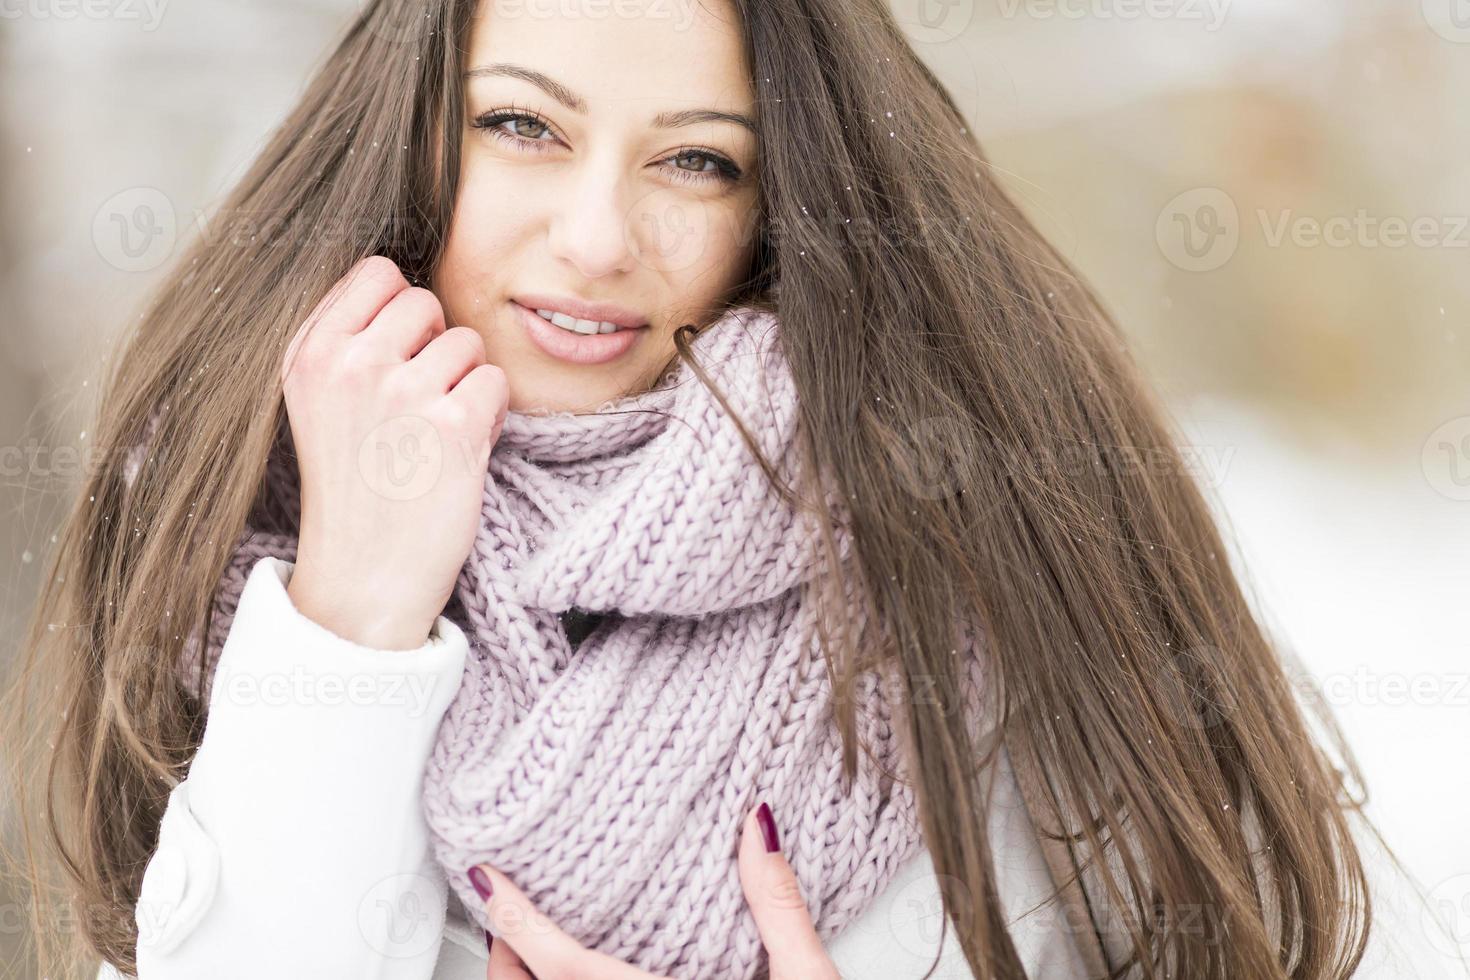 Young woman at winter photo